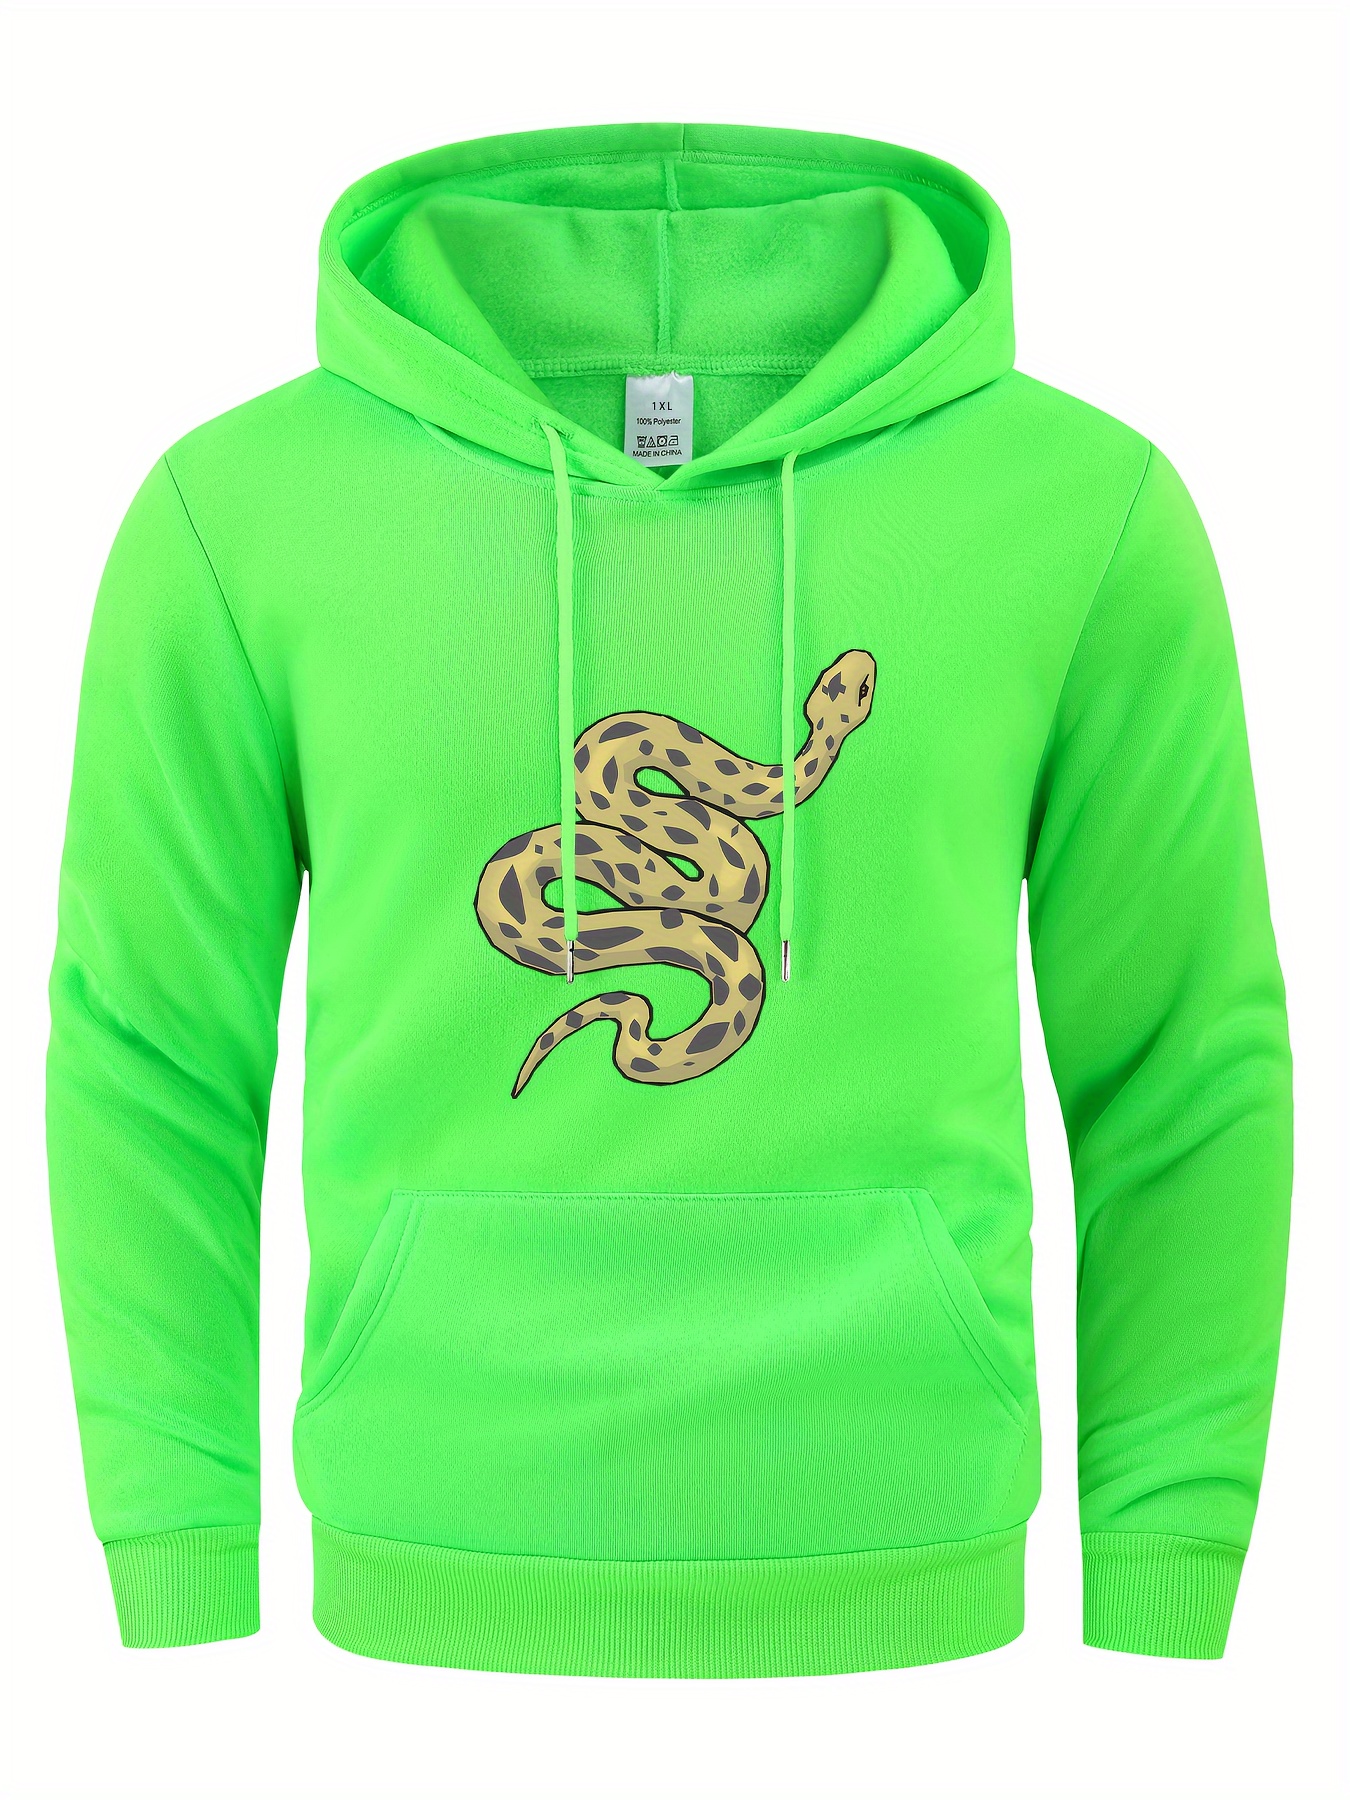 Plus Size Men's 3D Fish & Field Print Hoodies Fashion Casual Hooded  Sweatshirt For Fall Winter, Men's Clothing